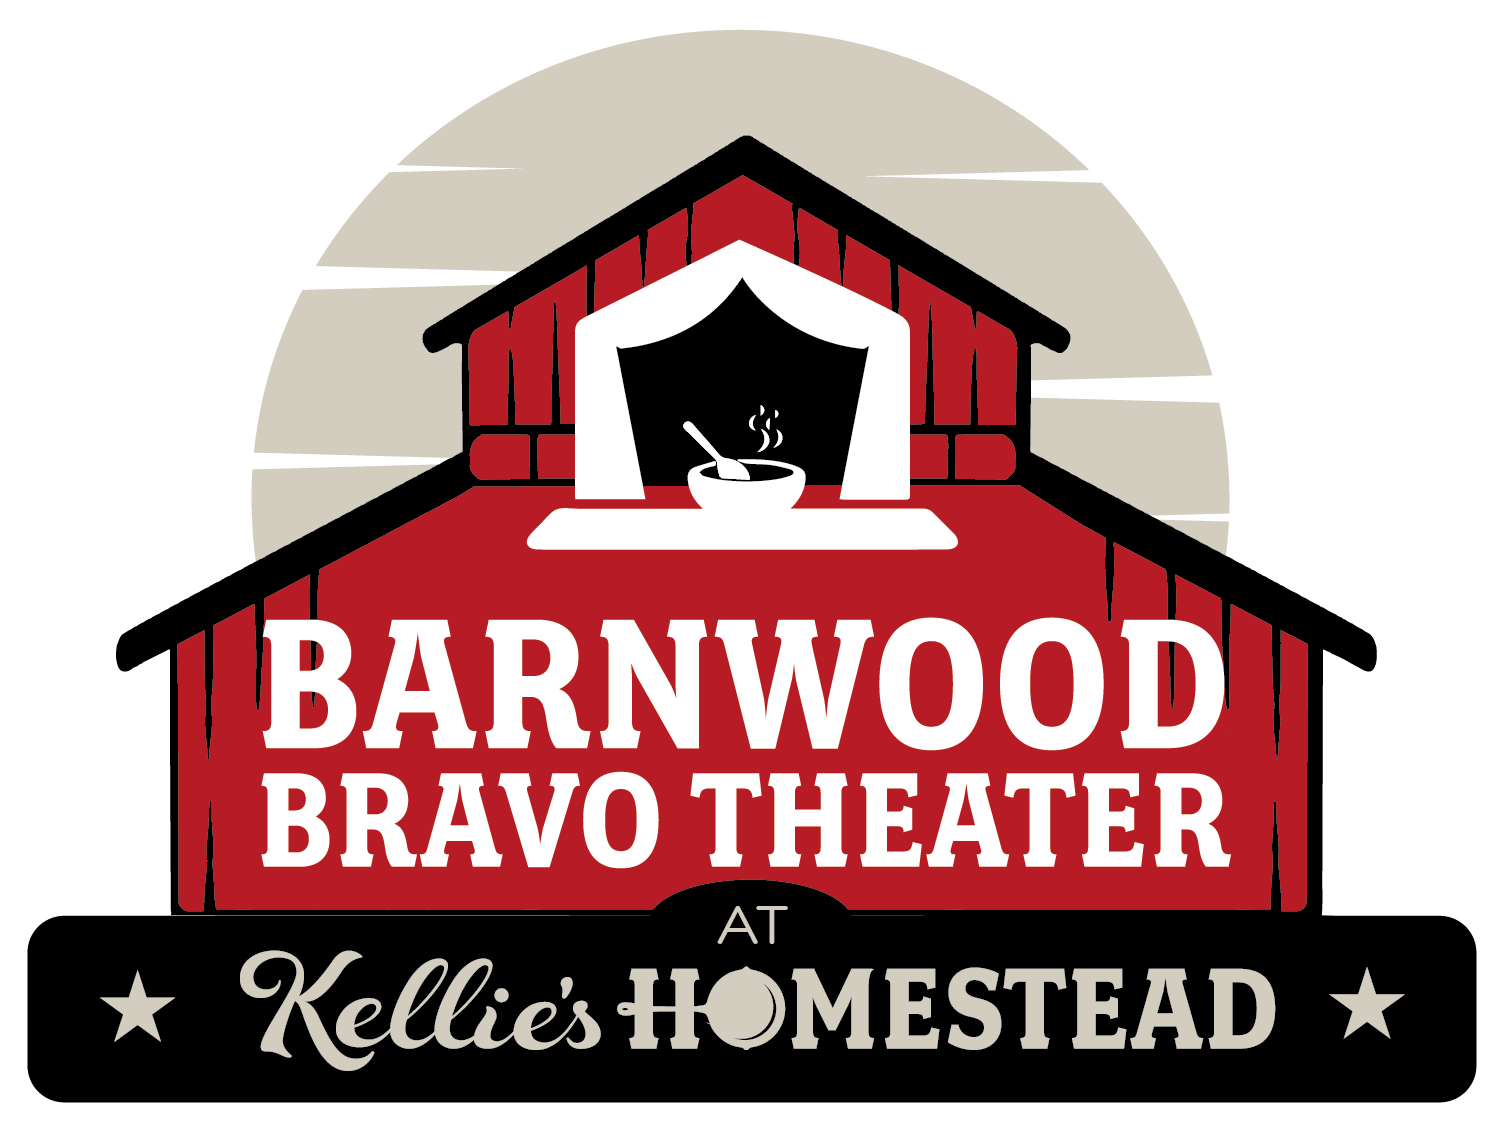 Barnwood Bravo Theater Live Entertainment